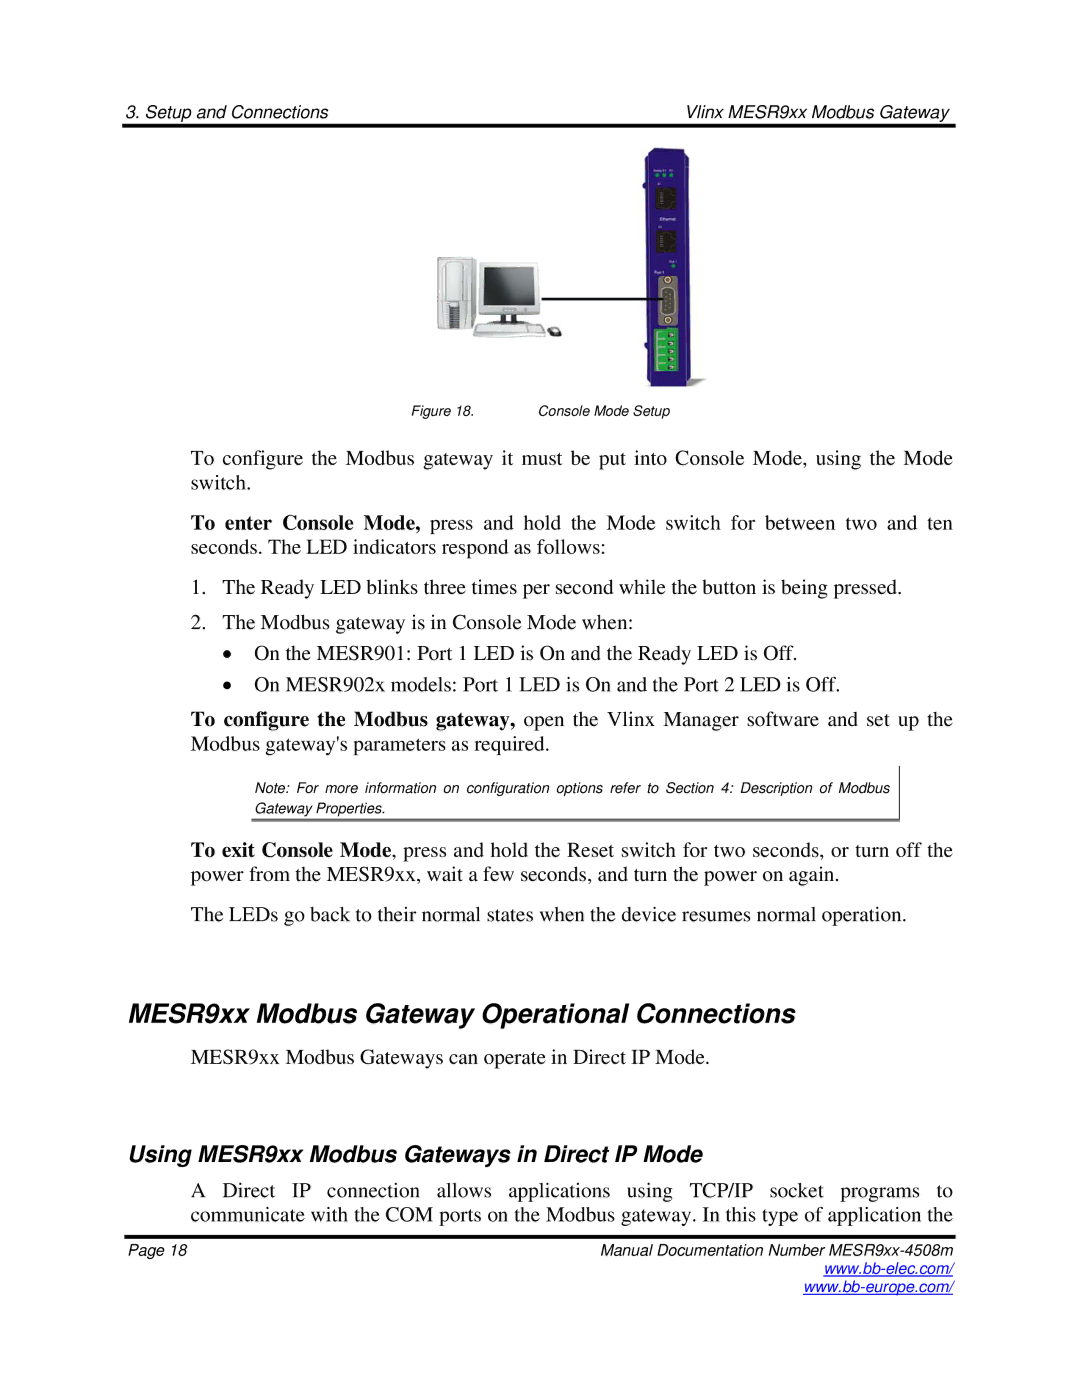 B&B Electronics manual MESR9xx Modbus Gateway Operational Connections, Using MESR9xx Modbus Gateways in Direct IP Mode 